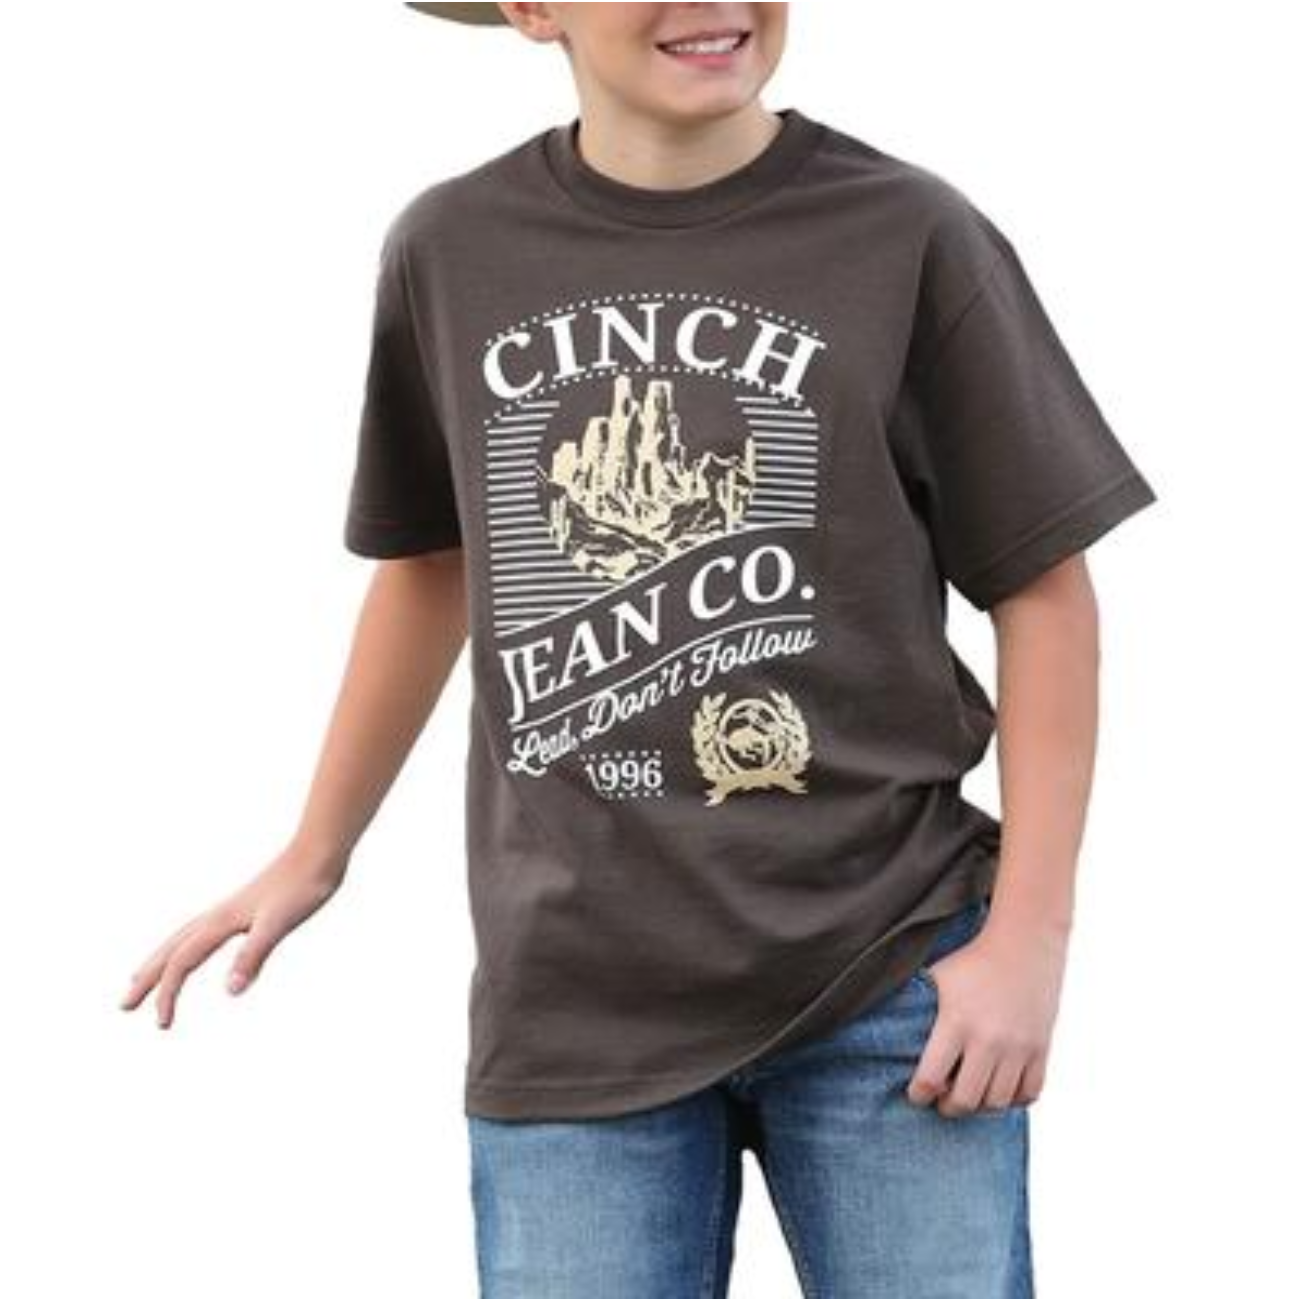 Cinch® Youth Boy's Cinch Jean Co. Brown Graphic T-shirt MTT7670119